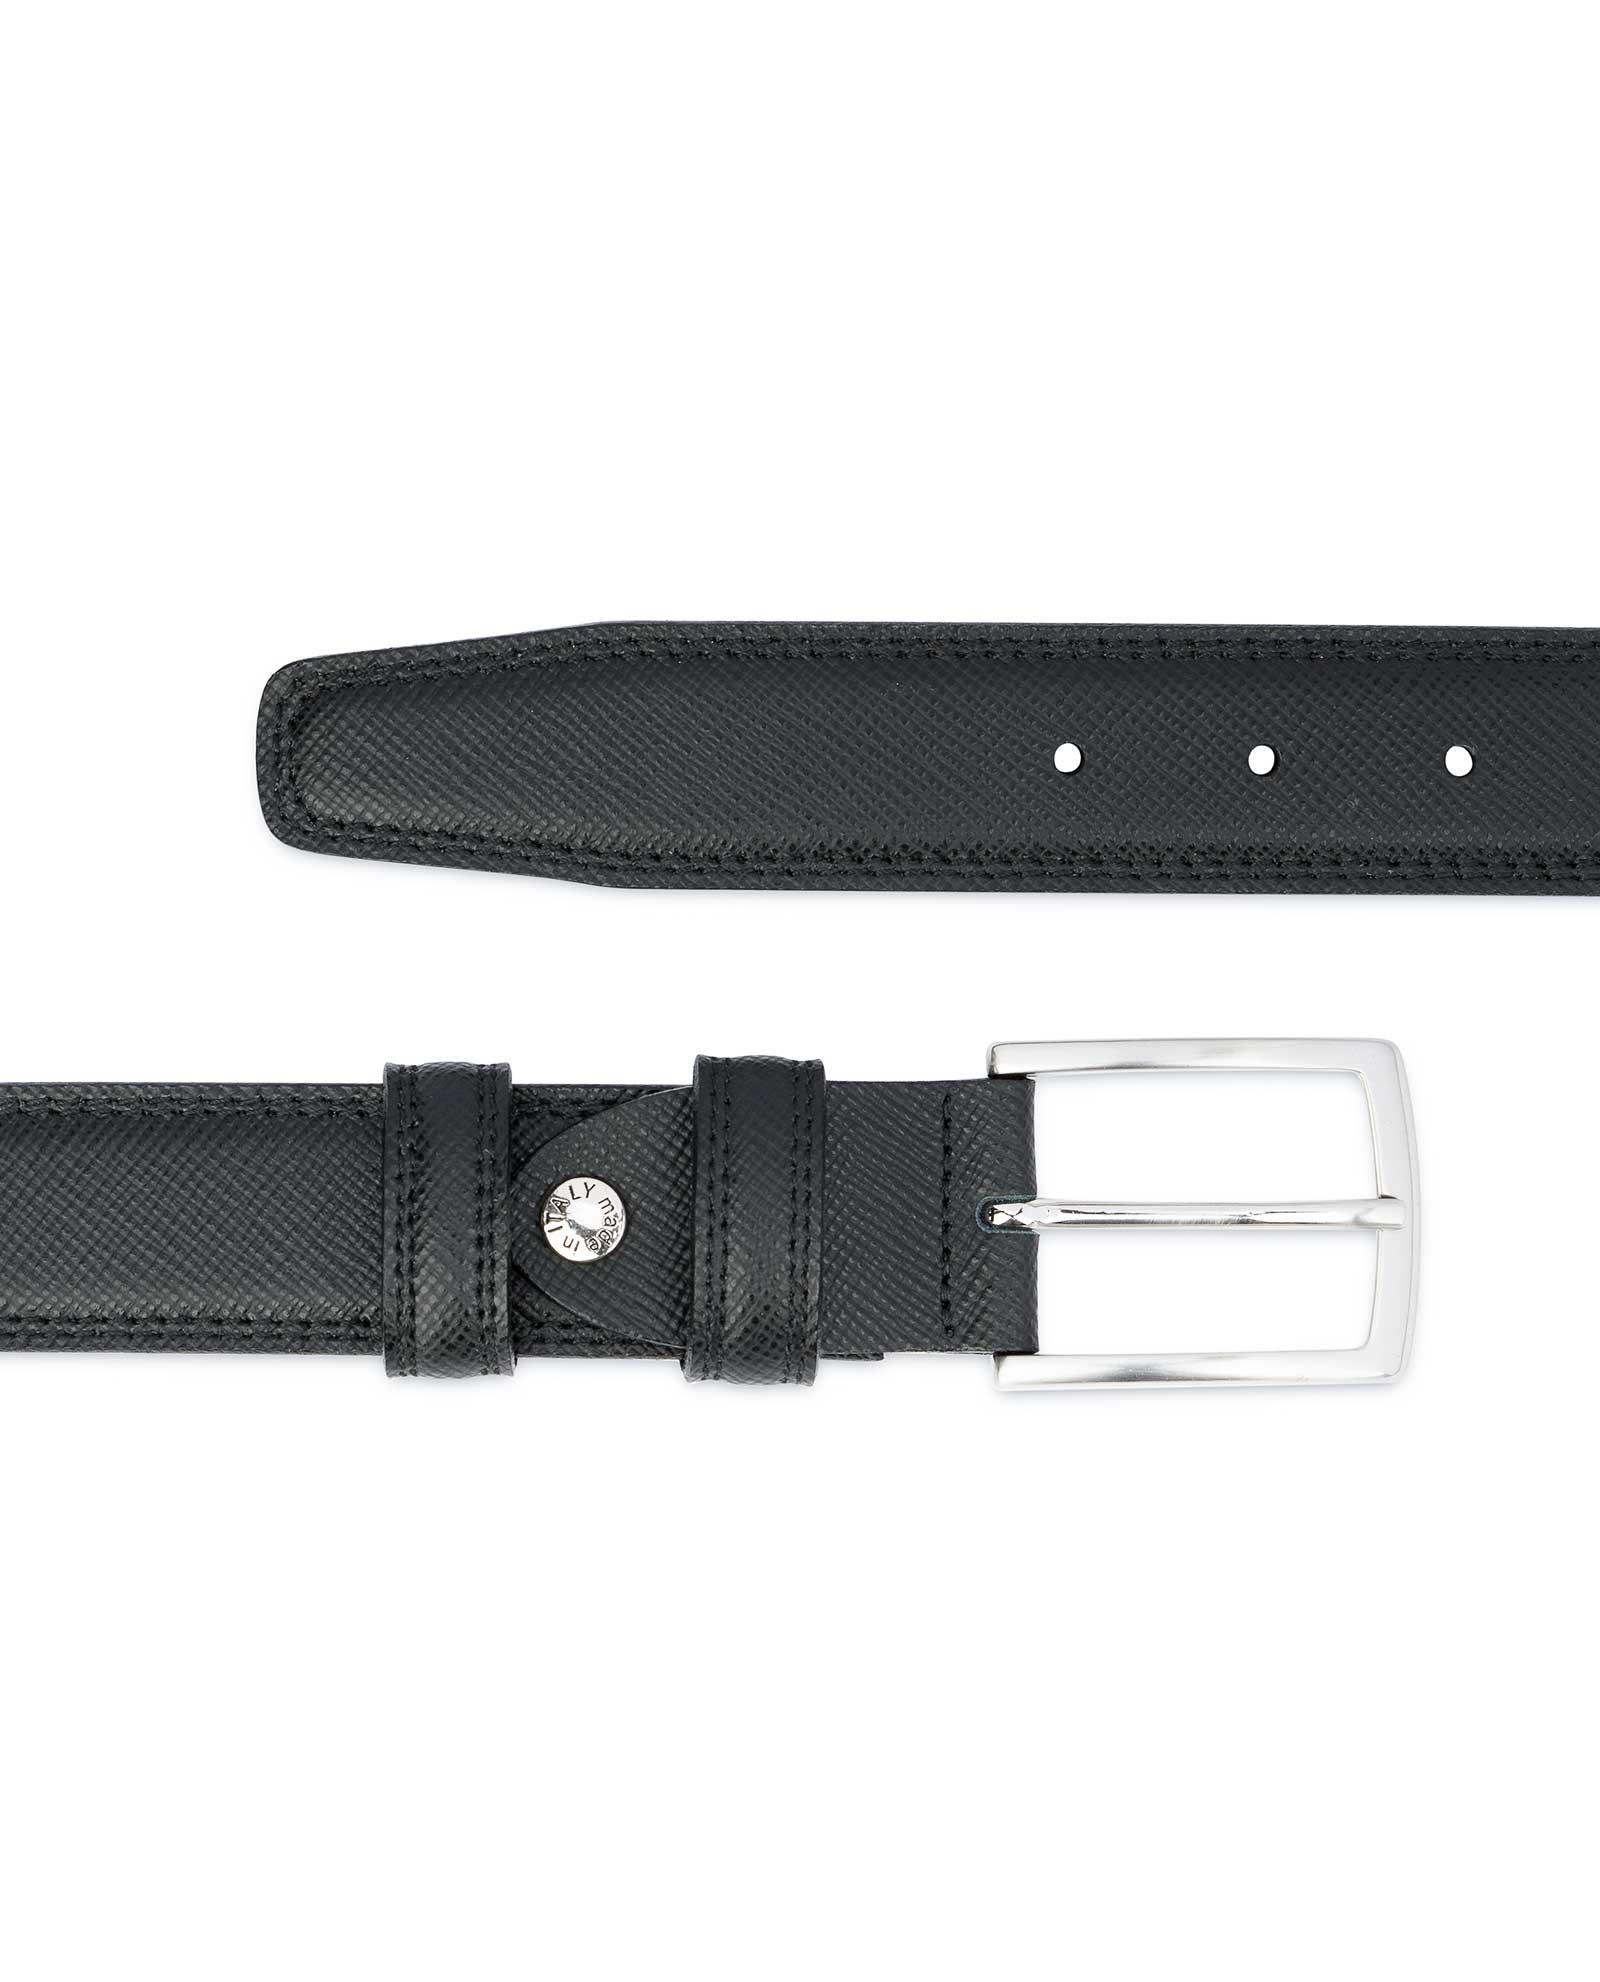 Saffiano Leather Belt Black 1-1/8" Men's belts Thin Classic Fashion Dress Sz 38" 